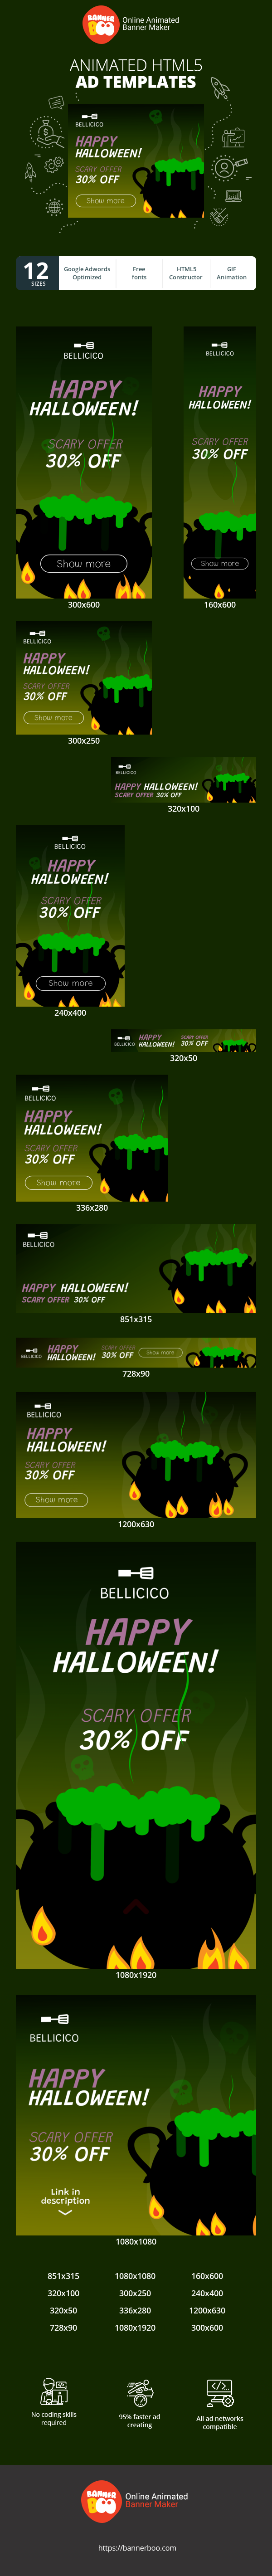 Szablon reklamy banerowej — Happy Halloween — Scary Offer 30% Off